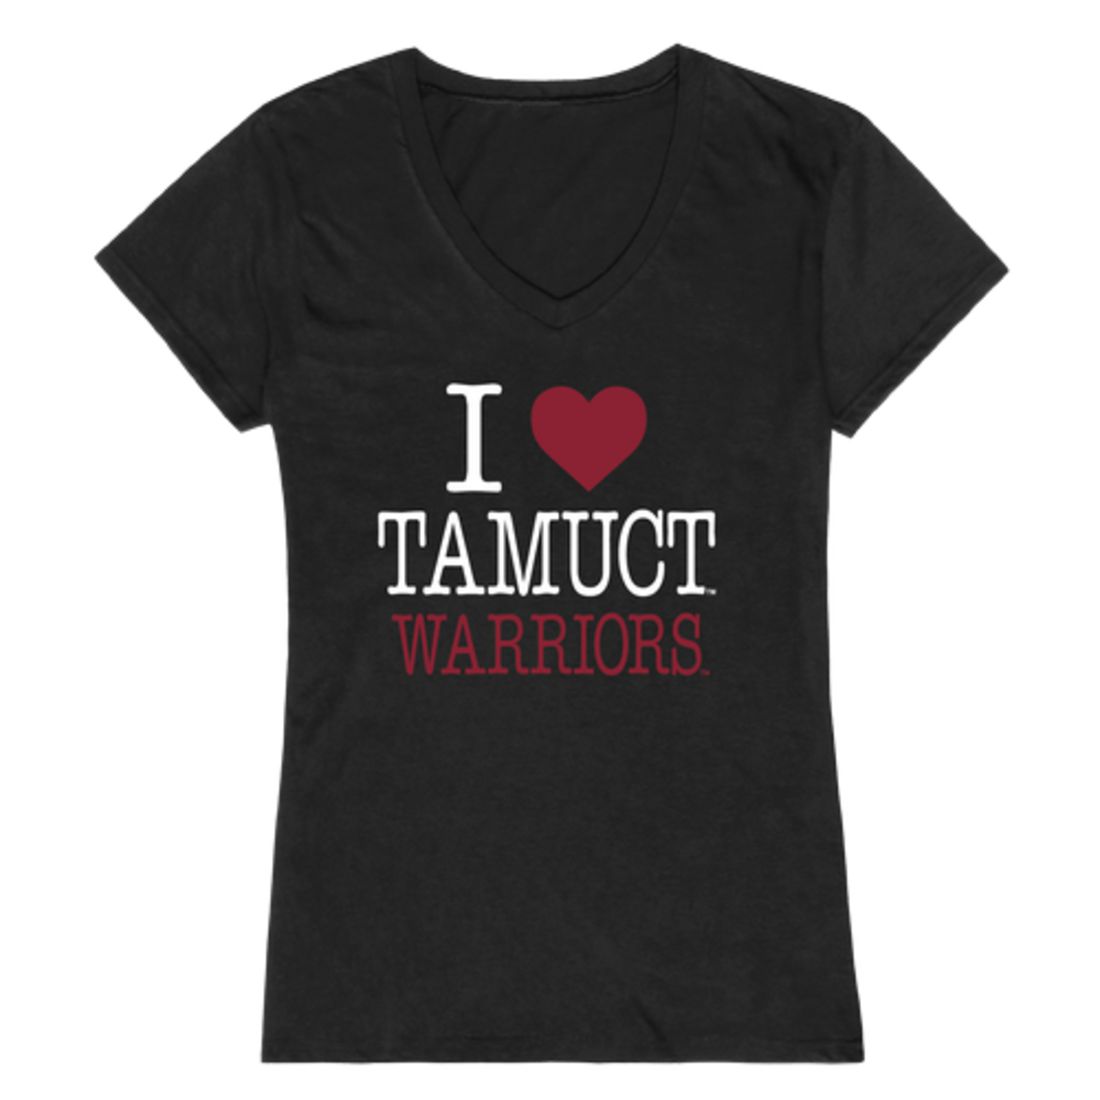 I Love Texas A&M University-Central Texas Warriors Womens T-Shirt Tee